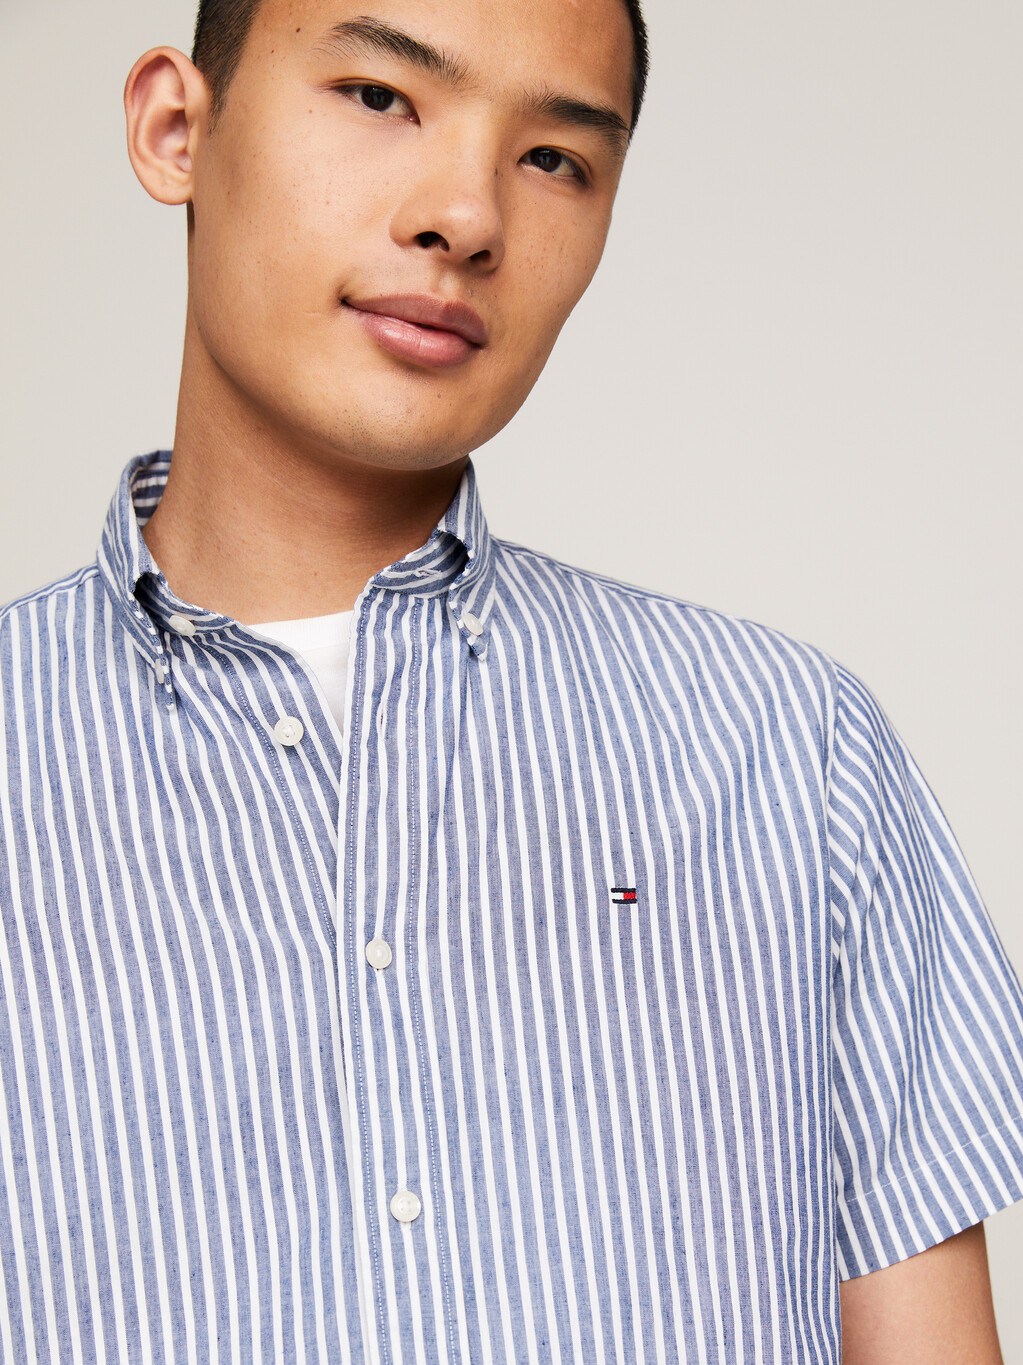 條紋常規版型短袖襯衫, Anchor Blue / Optic White, hi-res